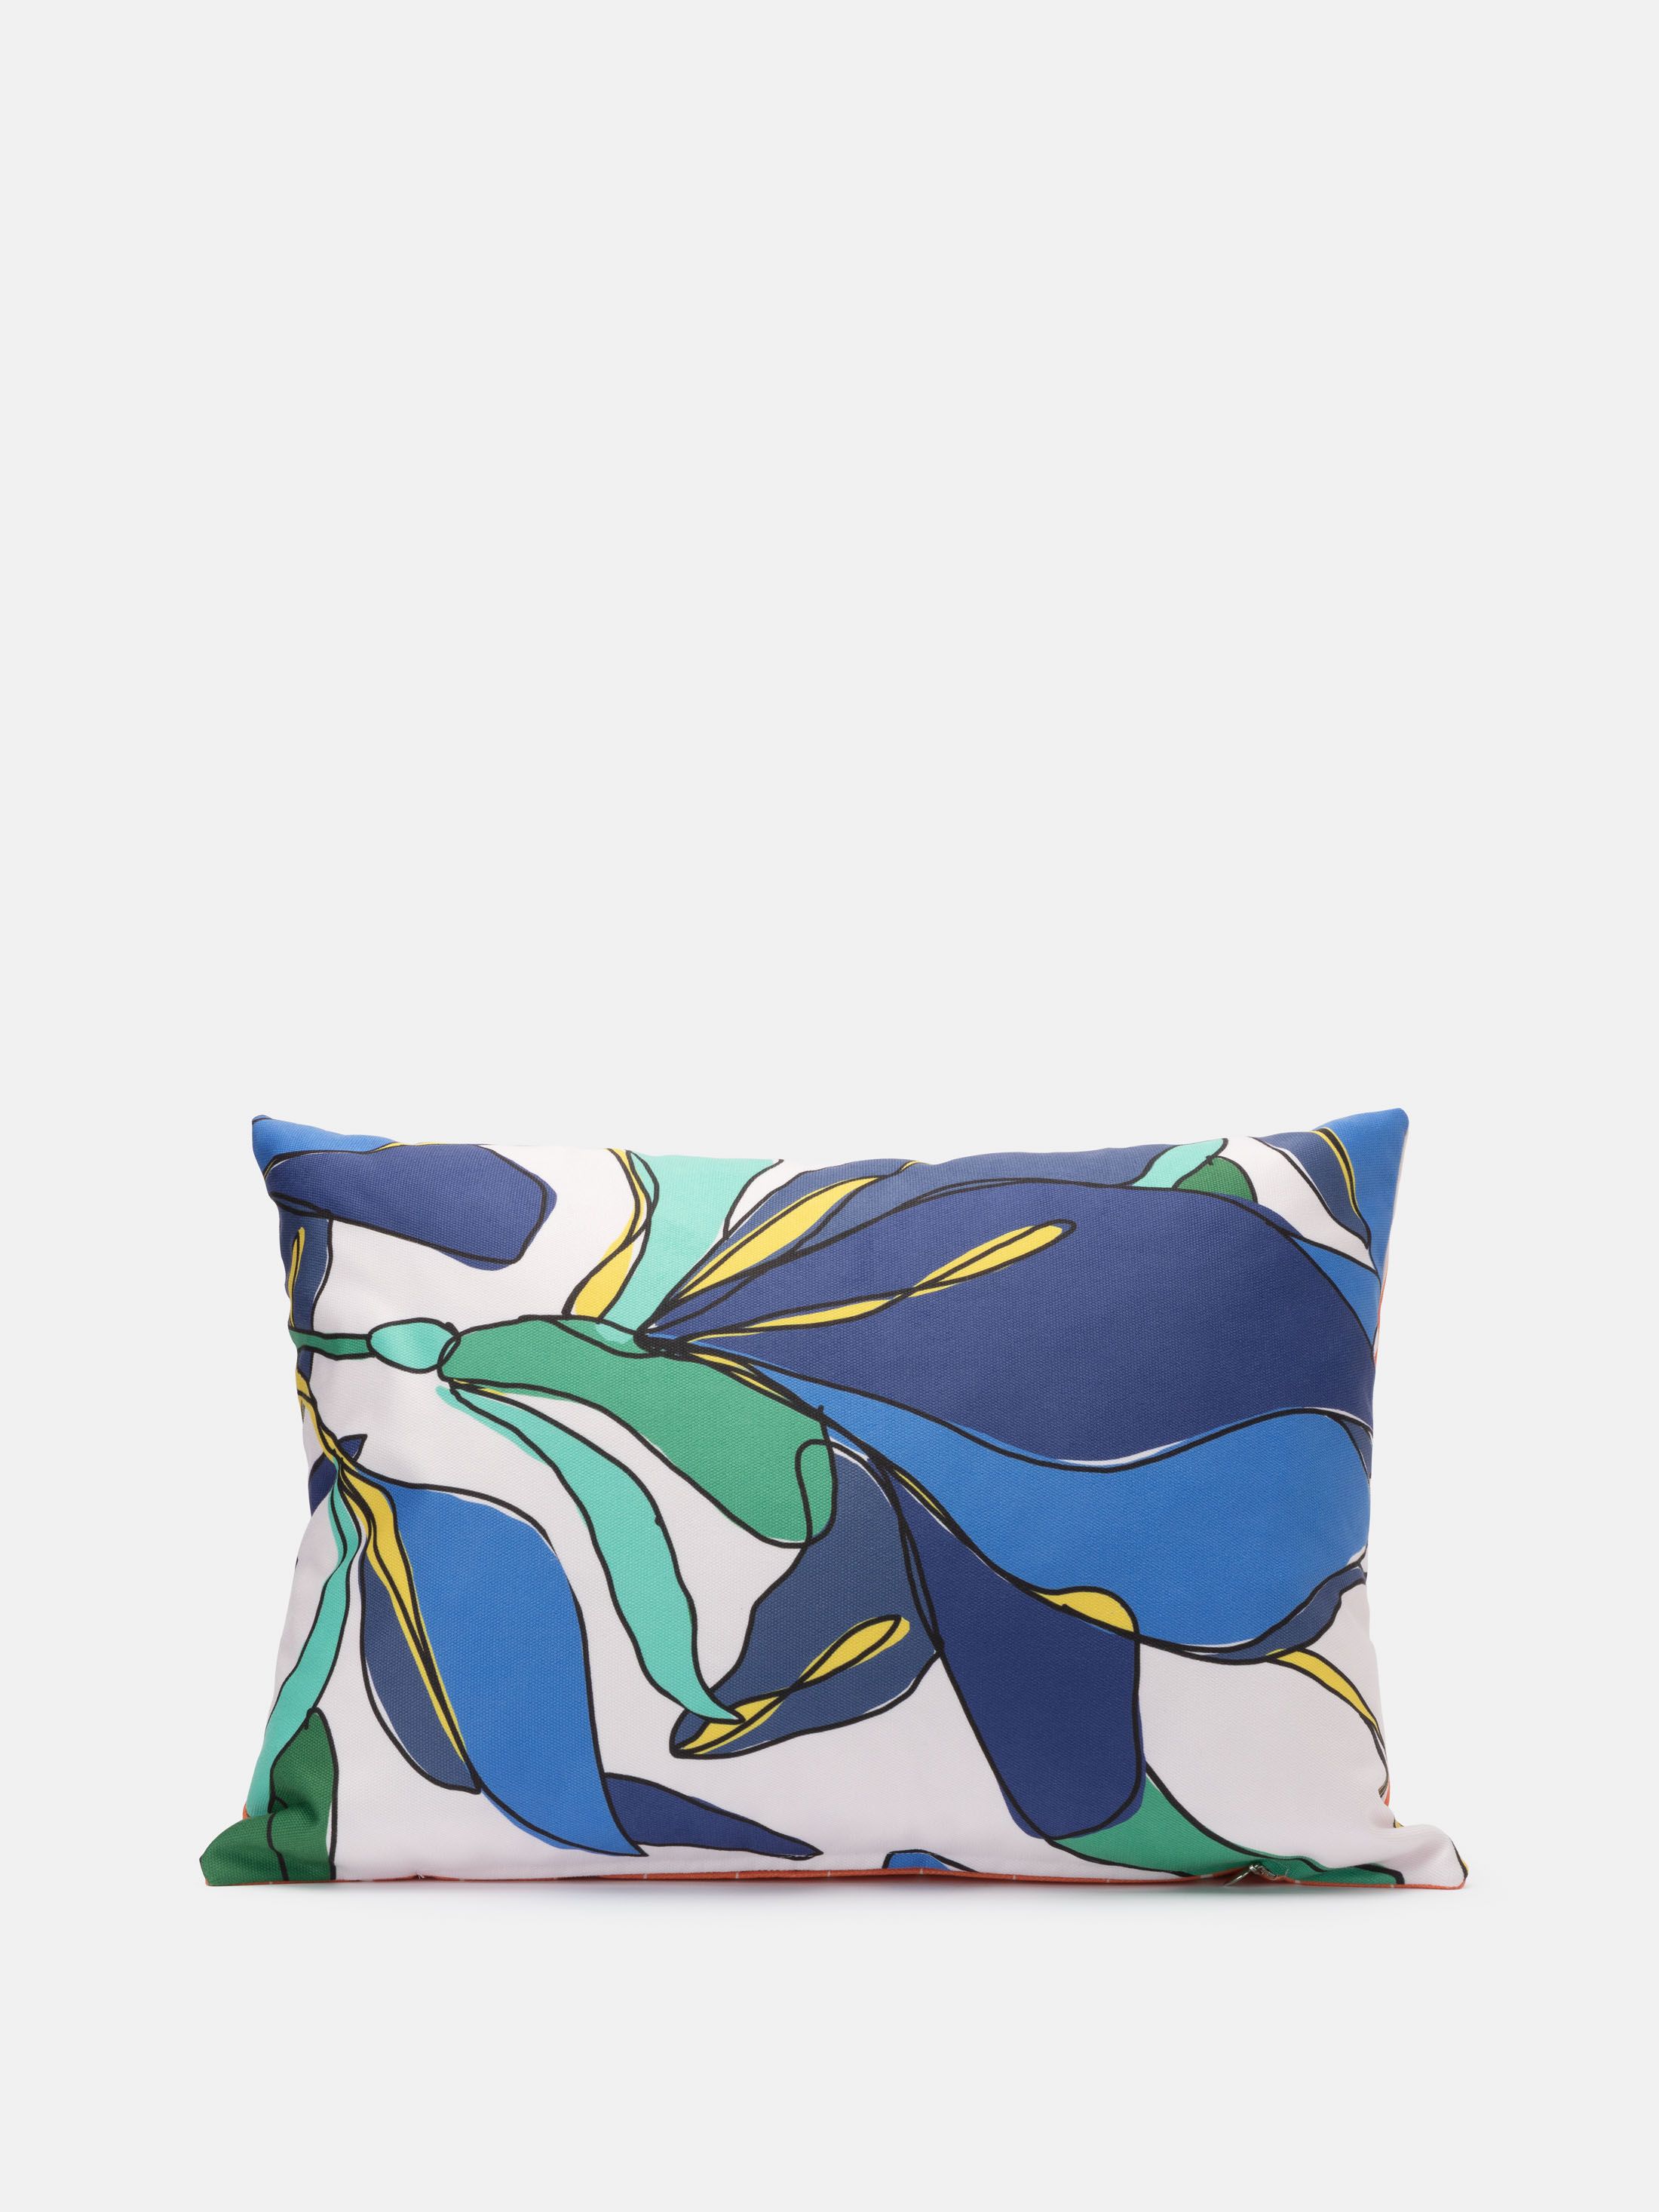 abstract custom cushion covers